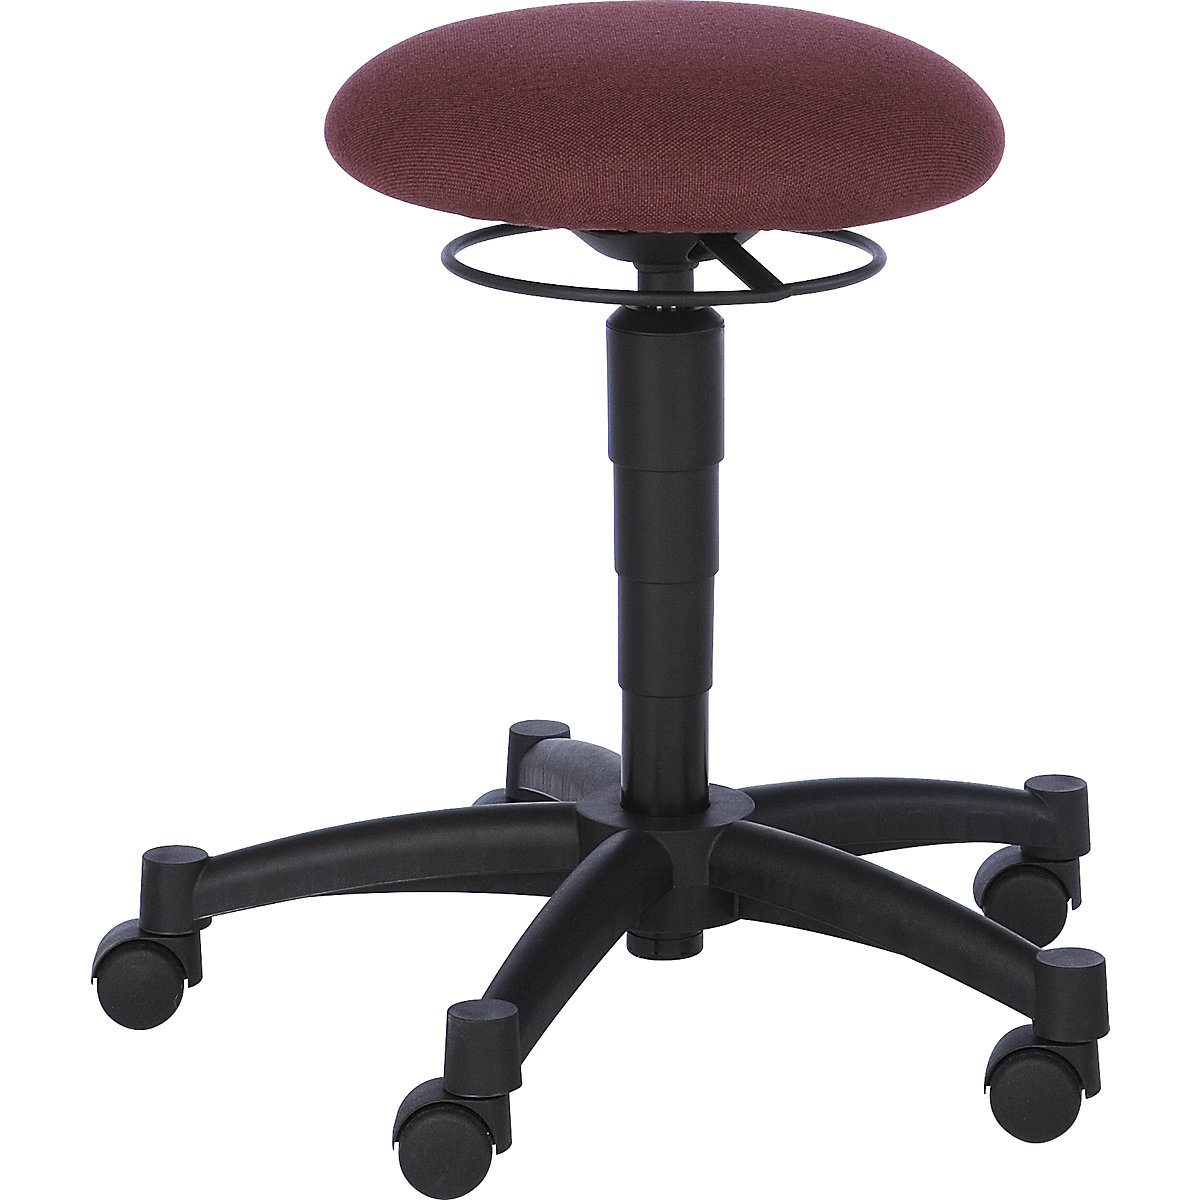 BALANCE 10 stool – Topstar, with orthopaedic seat, Ø 350 mm, bordeaux-4